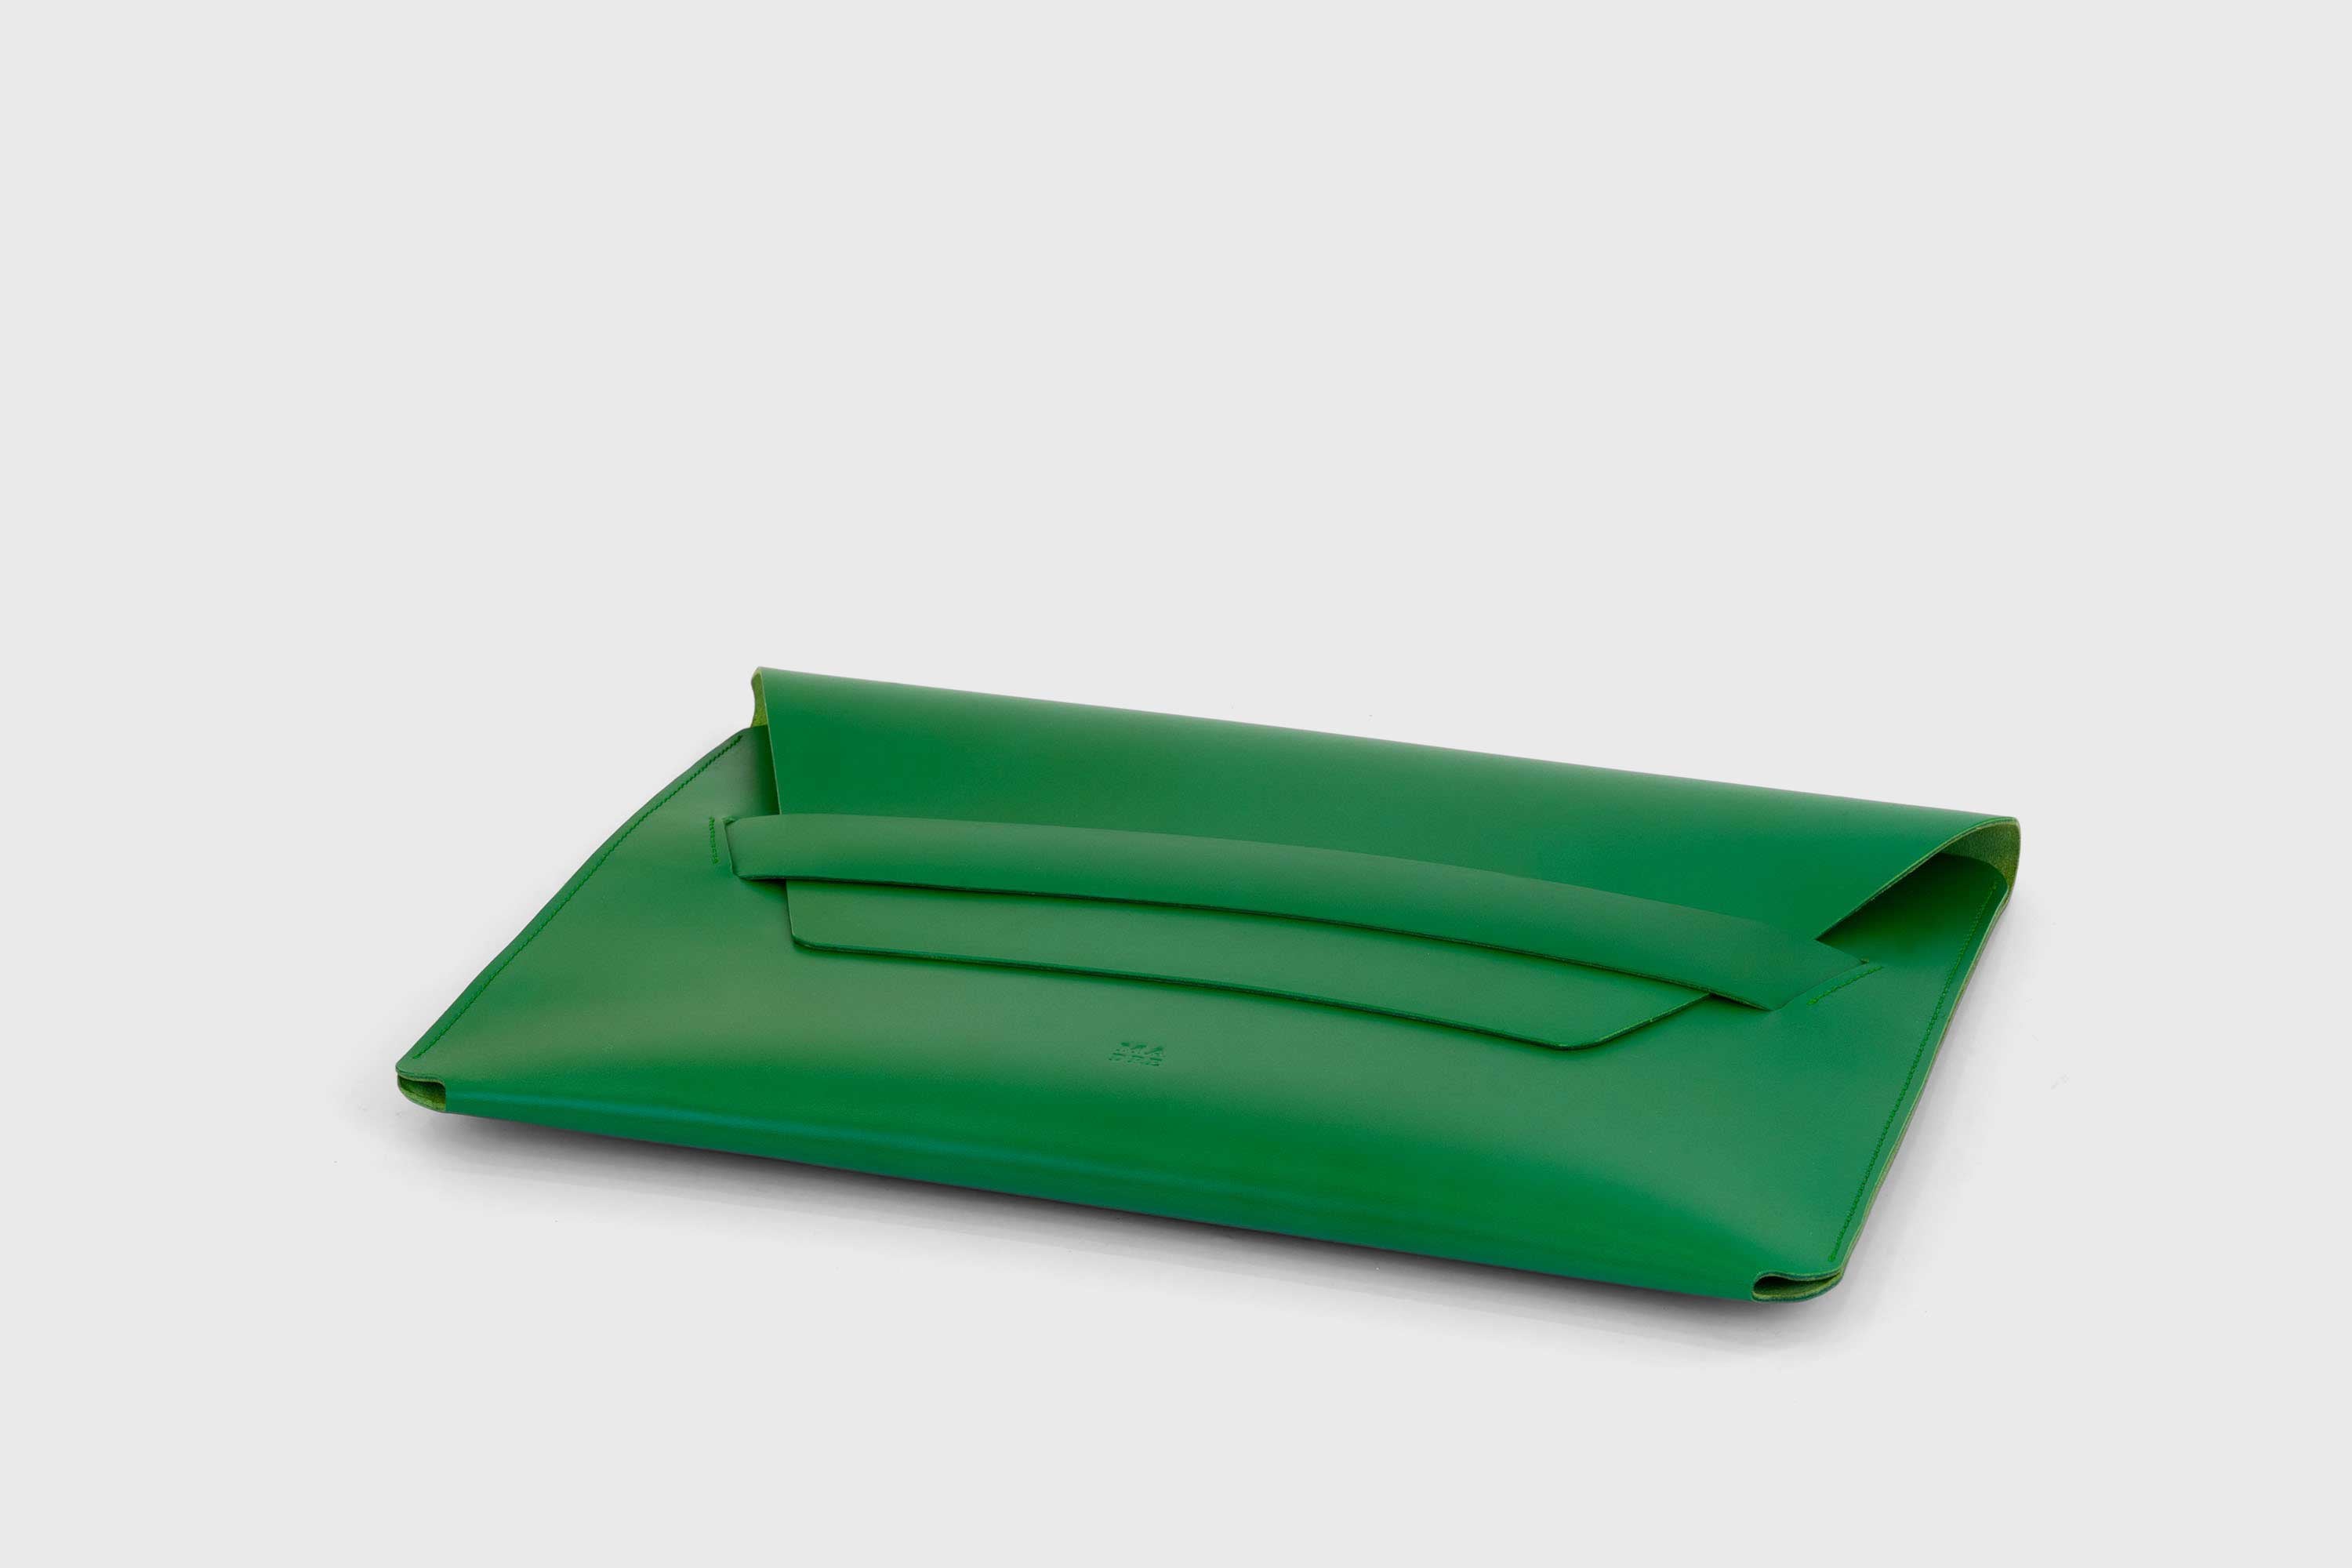 Leather Sleeve Grass Green for MacBook Air 11 Inch Premium Minimalist Sleek Design Atelier Madre Manuel Dreesmann Barcelona Spain